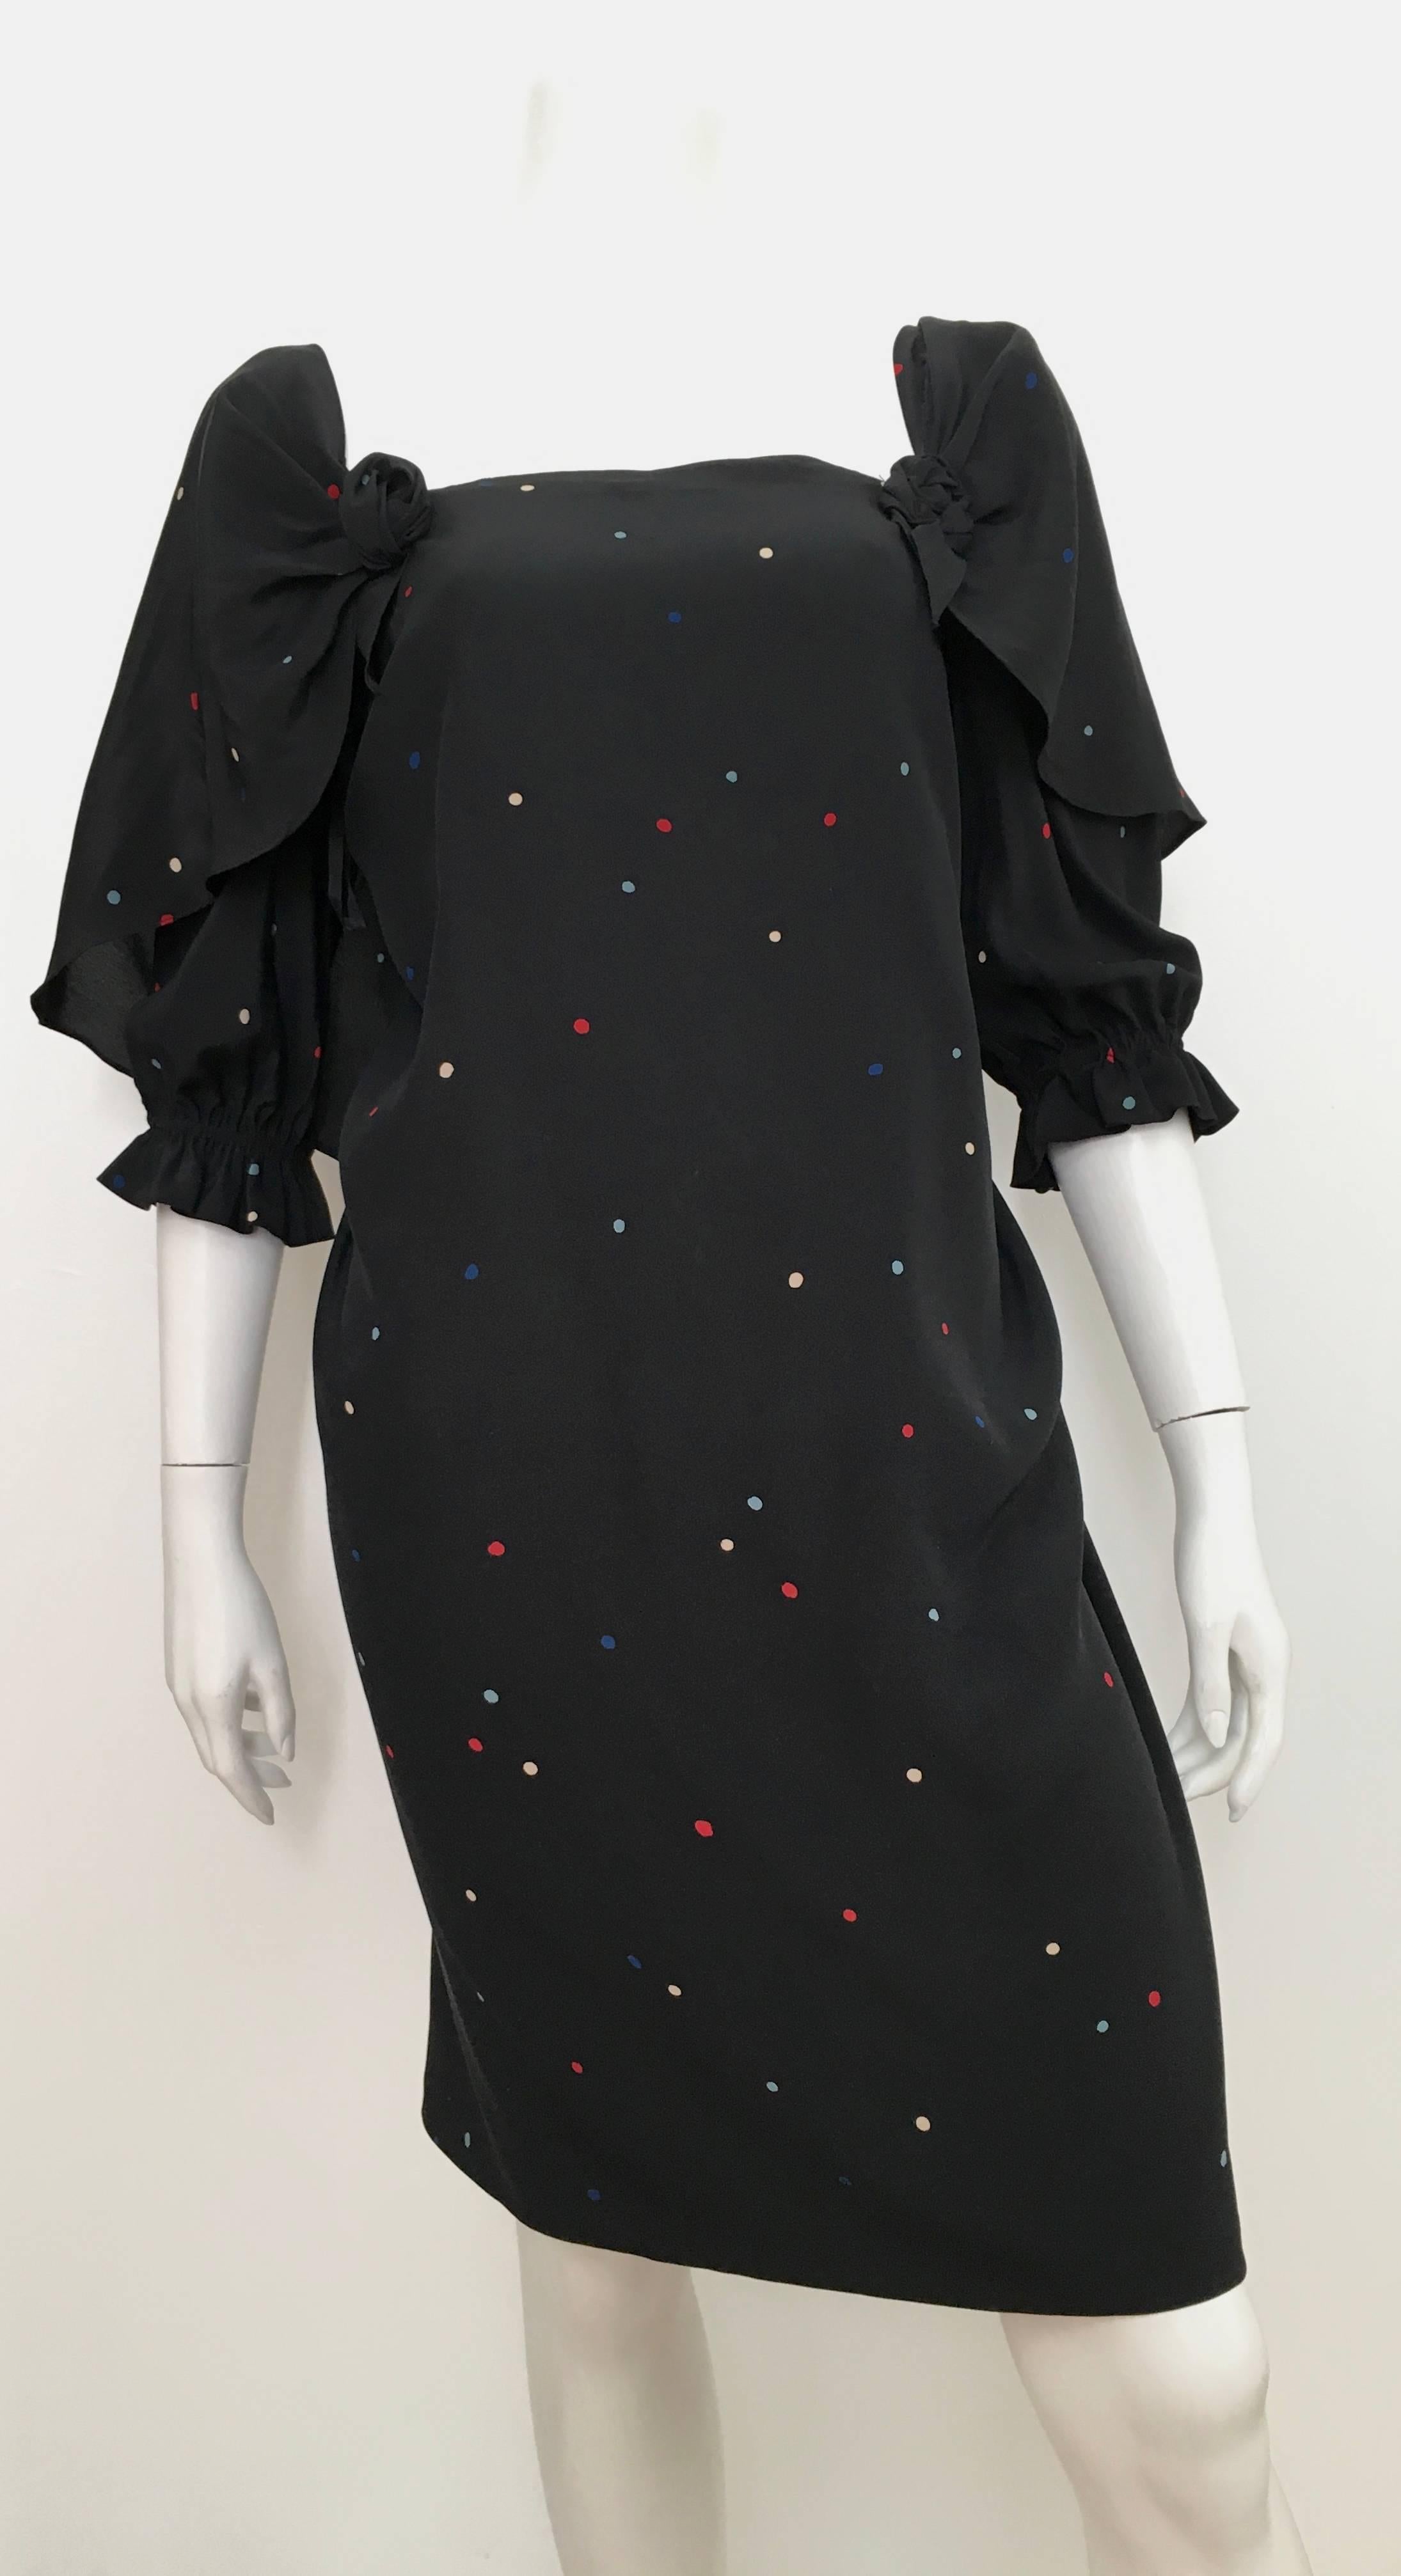 Halston 1970s Black Silk Polka Dot Dress Size 6 / 8. 5